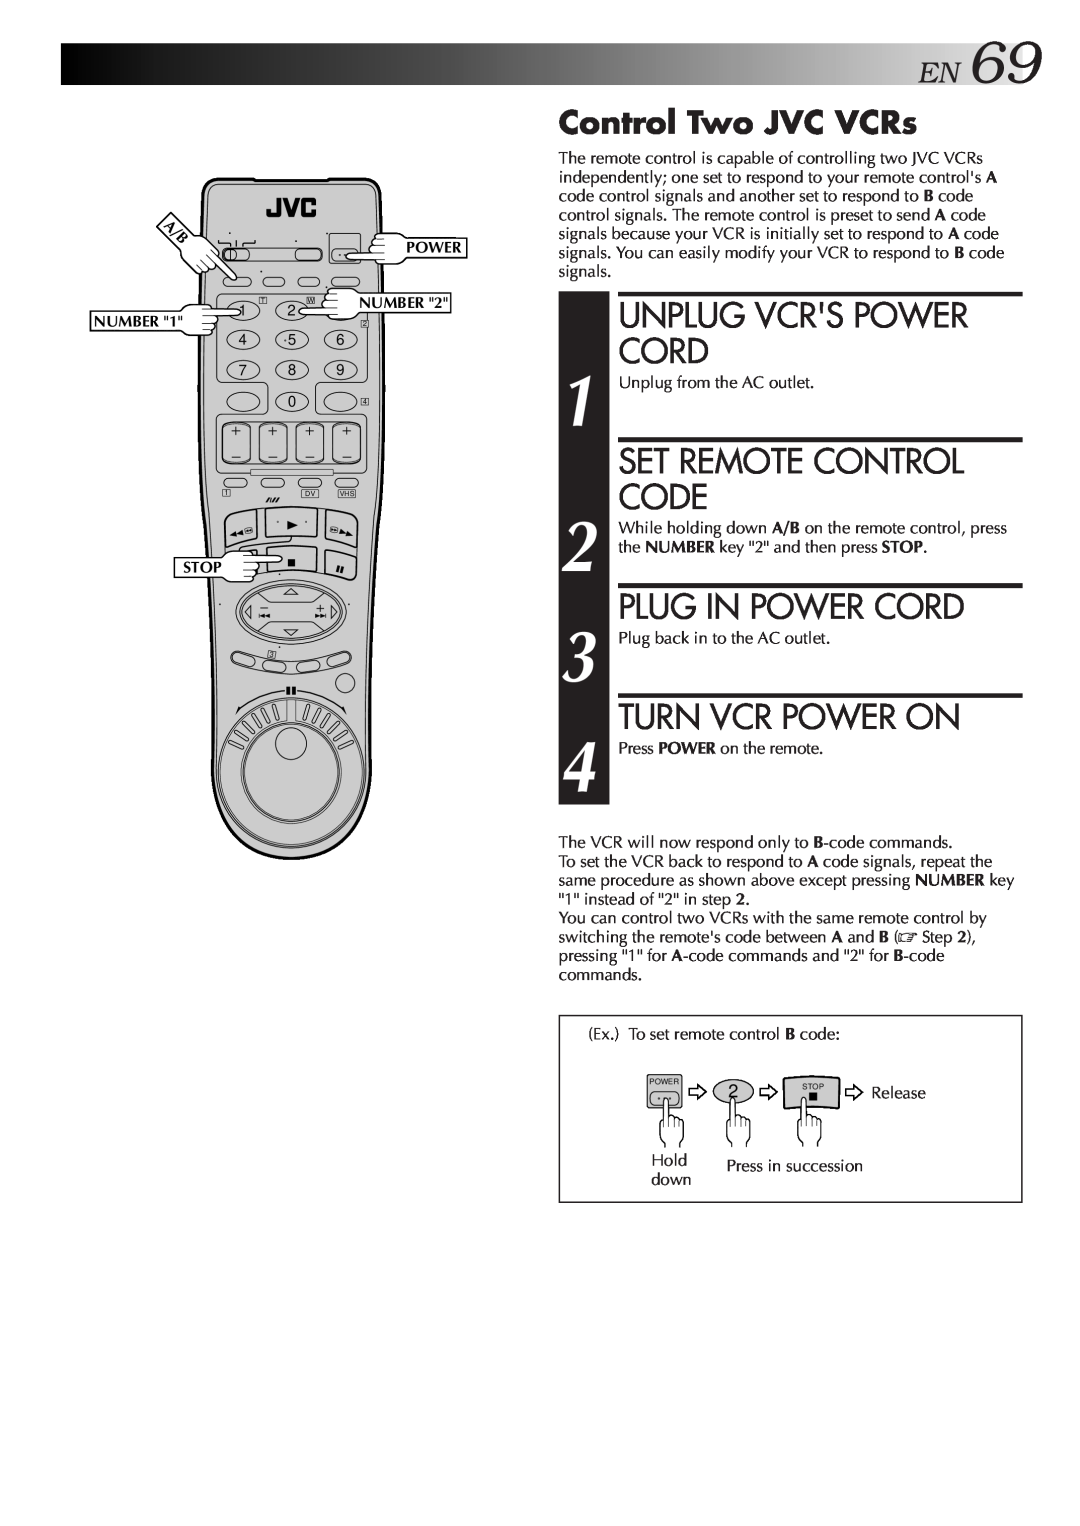 JVC SR-VS10U manual Unplug Vcrs Power, Code, Plug In Power Cord, Turn Vcr Power On, Control Two JVC VCRs, EN69 